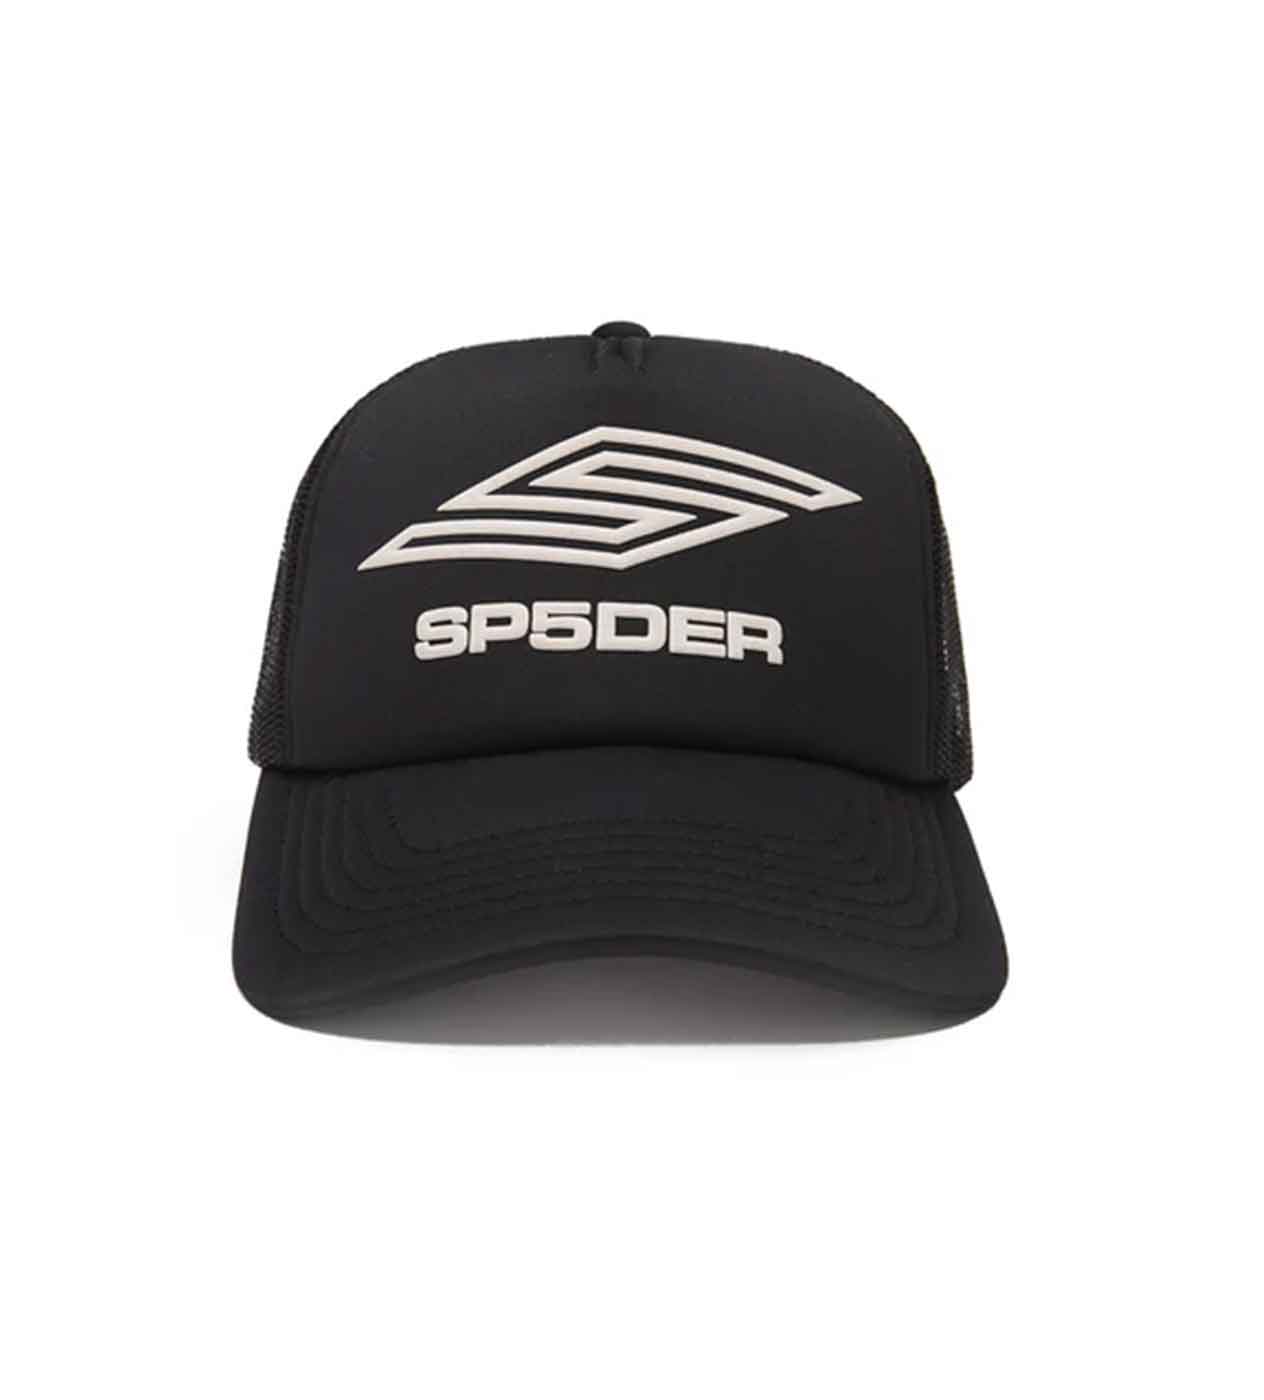 Sp5der Pro Trucker Hat Black (Snapback)